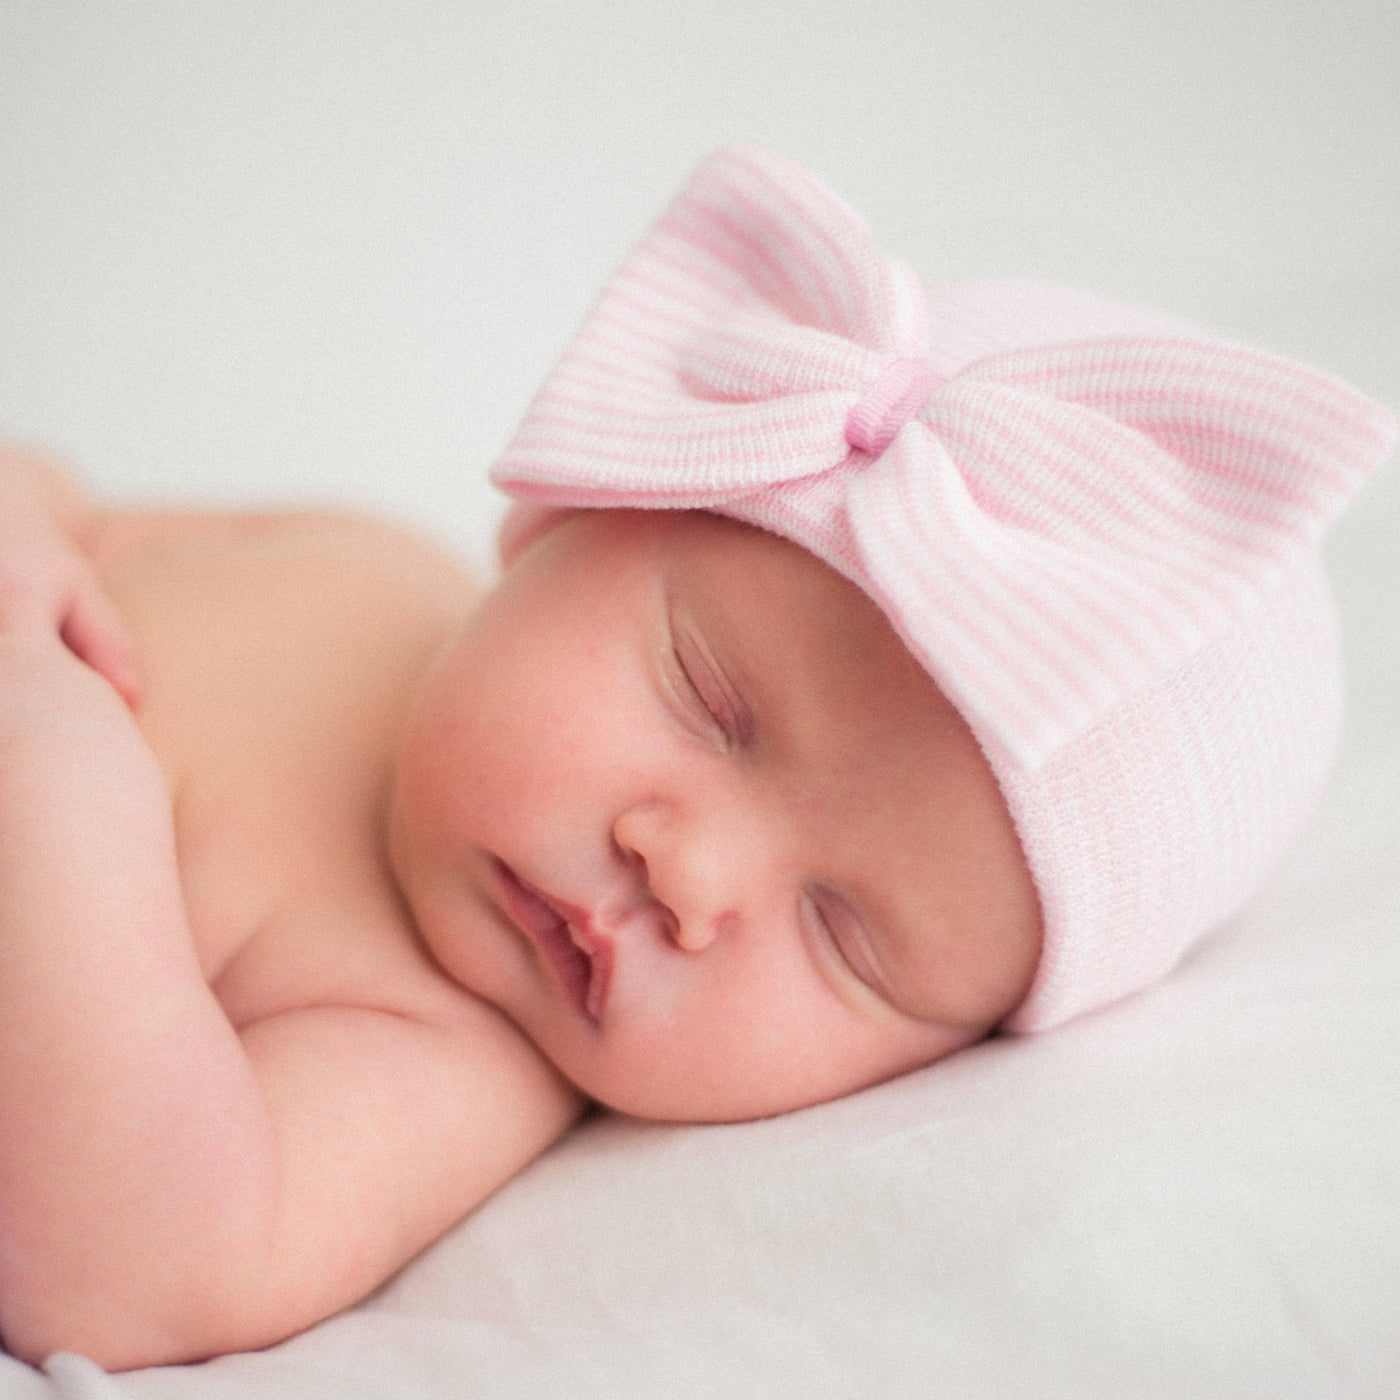 www.ilybean.com - SO SWEET Newborn Girl Hat - GIFT BOXED